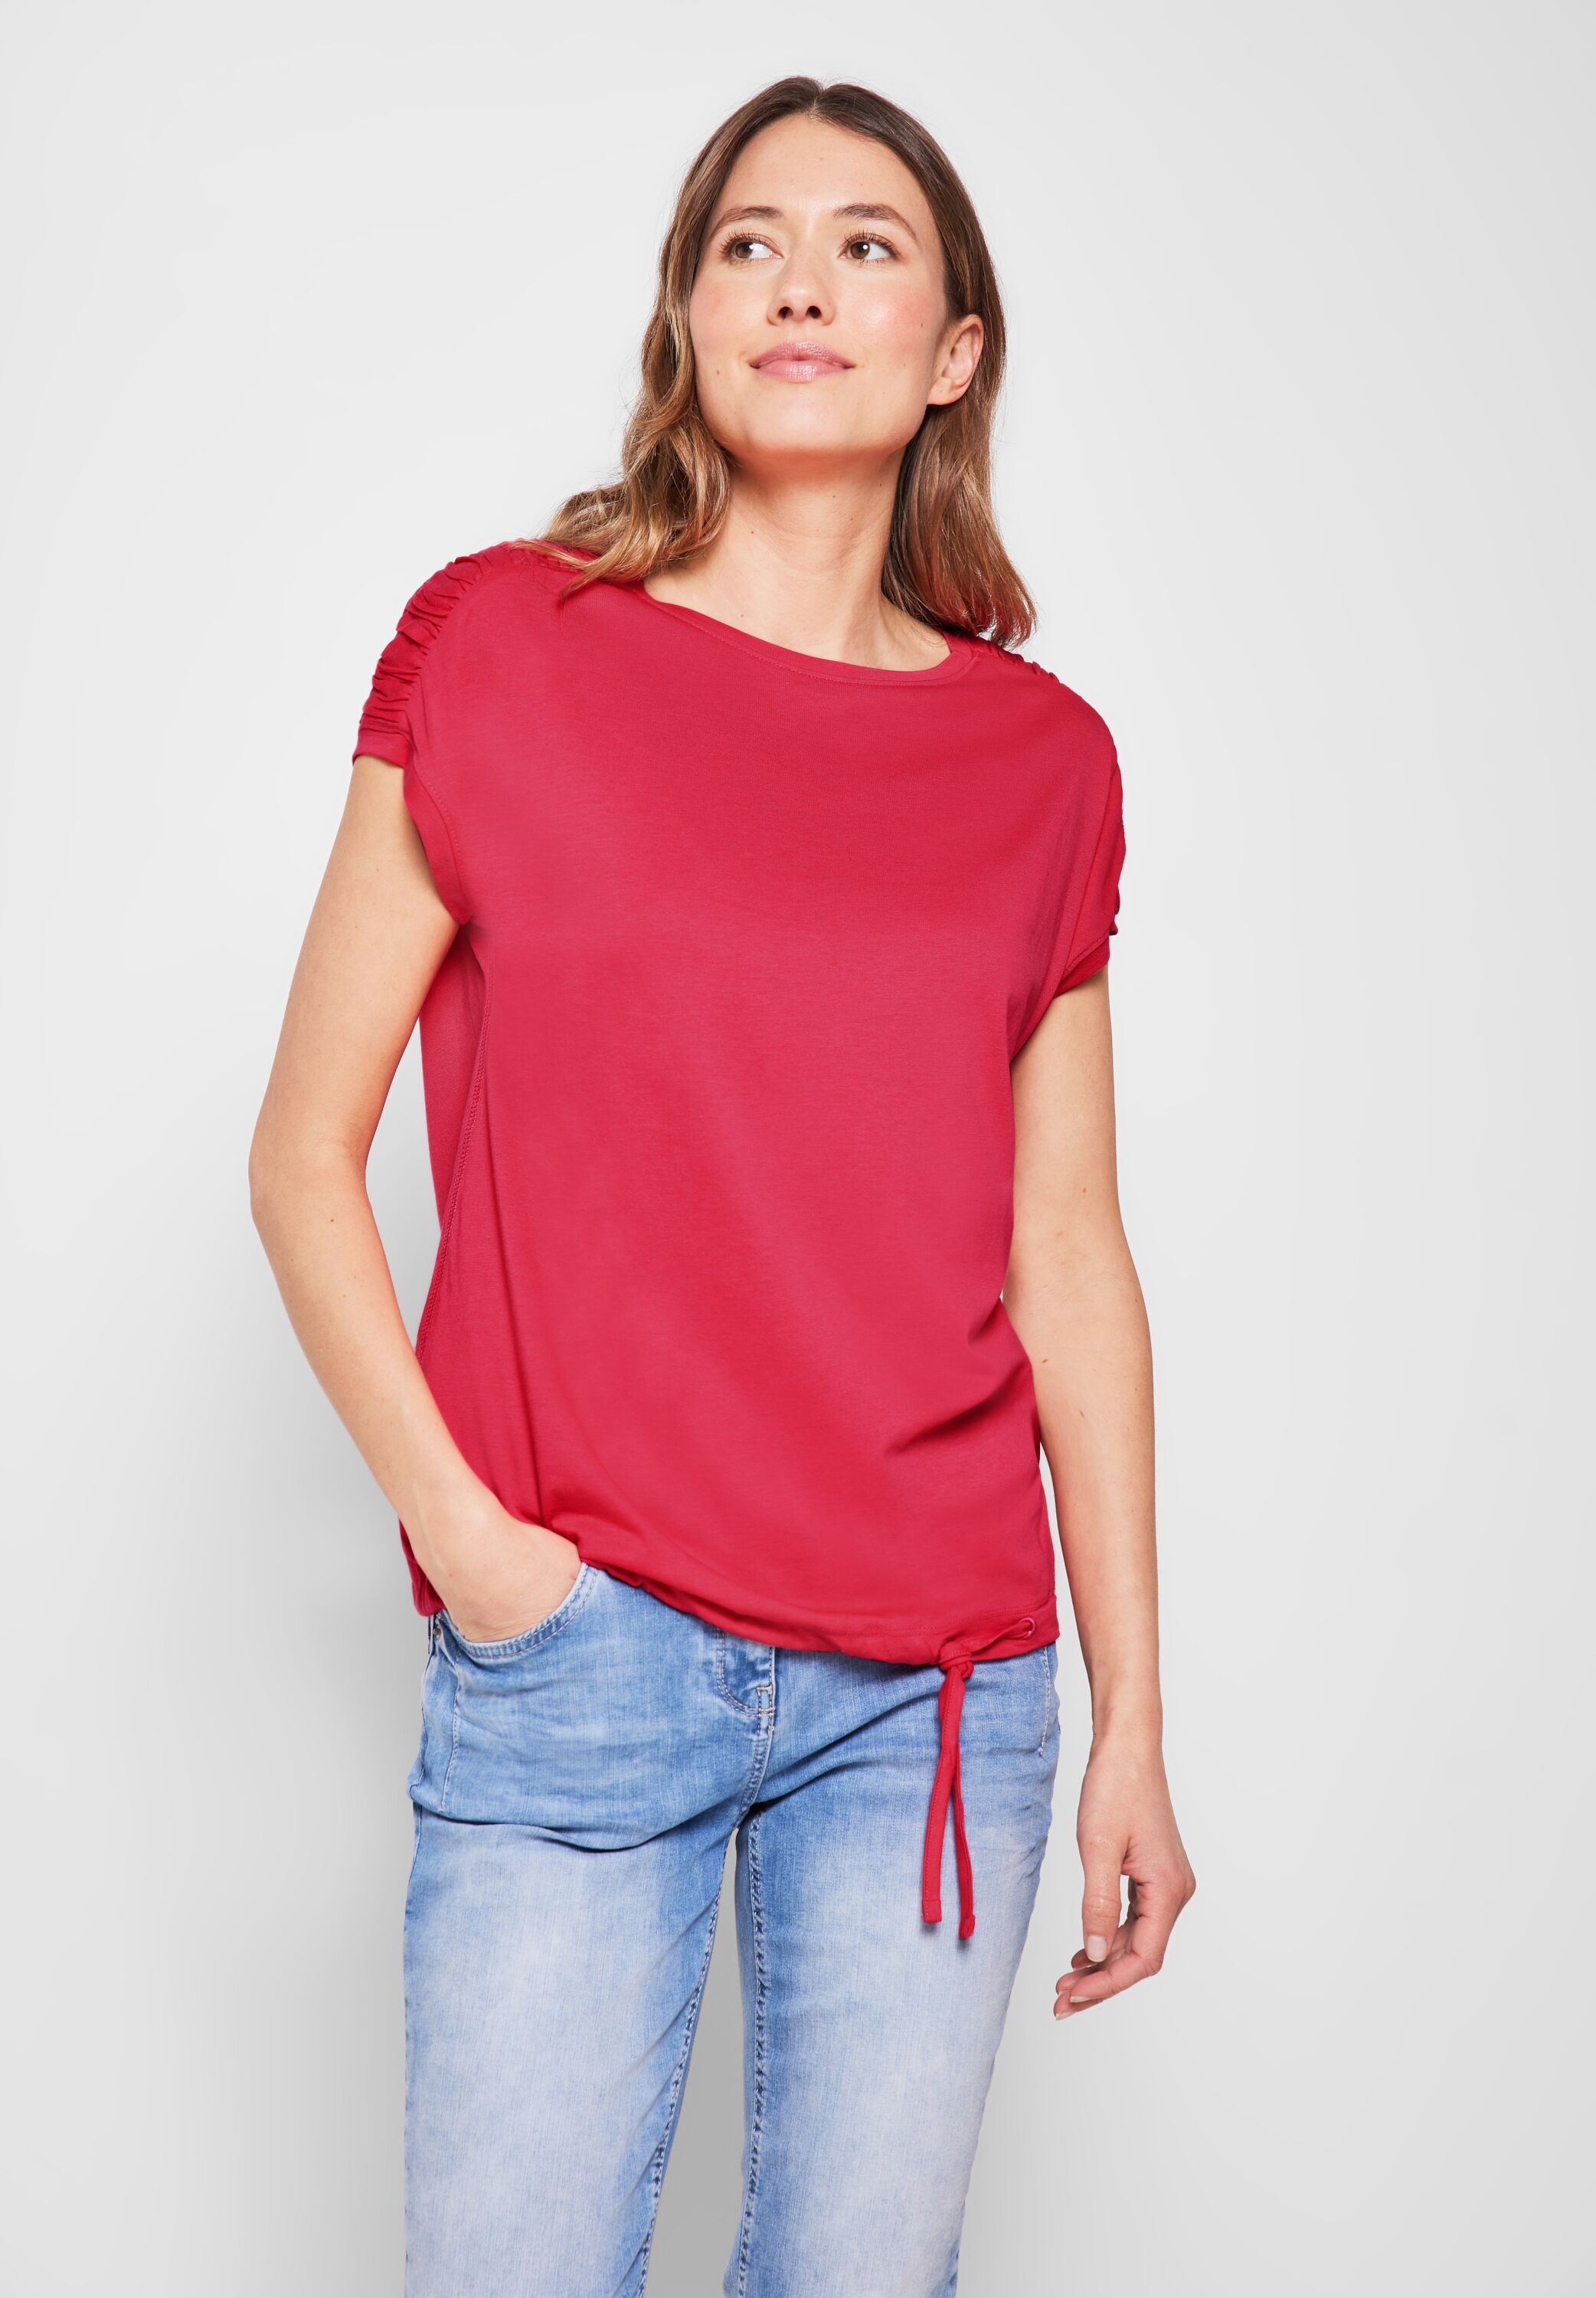 CECIL T-Shirt in Strawberry Red reduziert Mode CONCEPT - SALE im B319602-14472